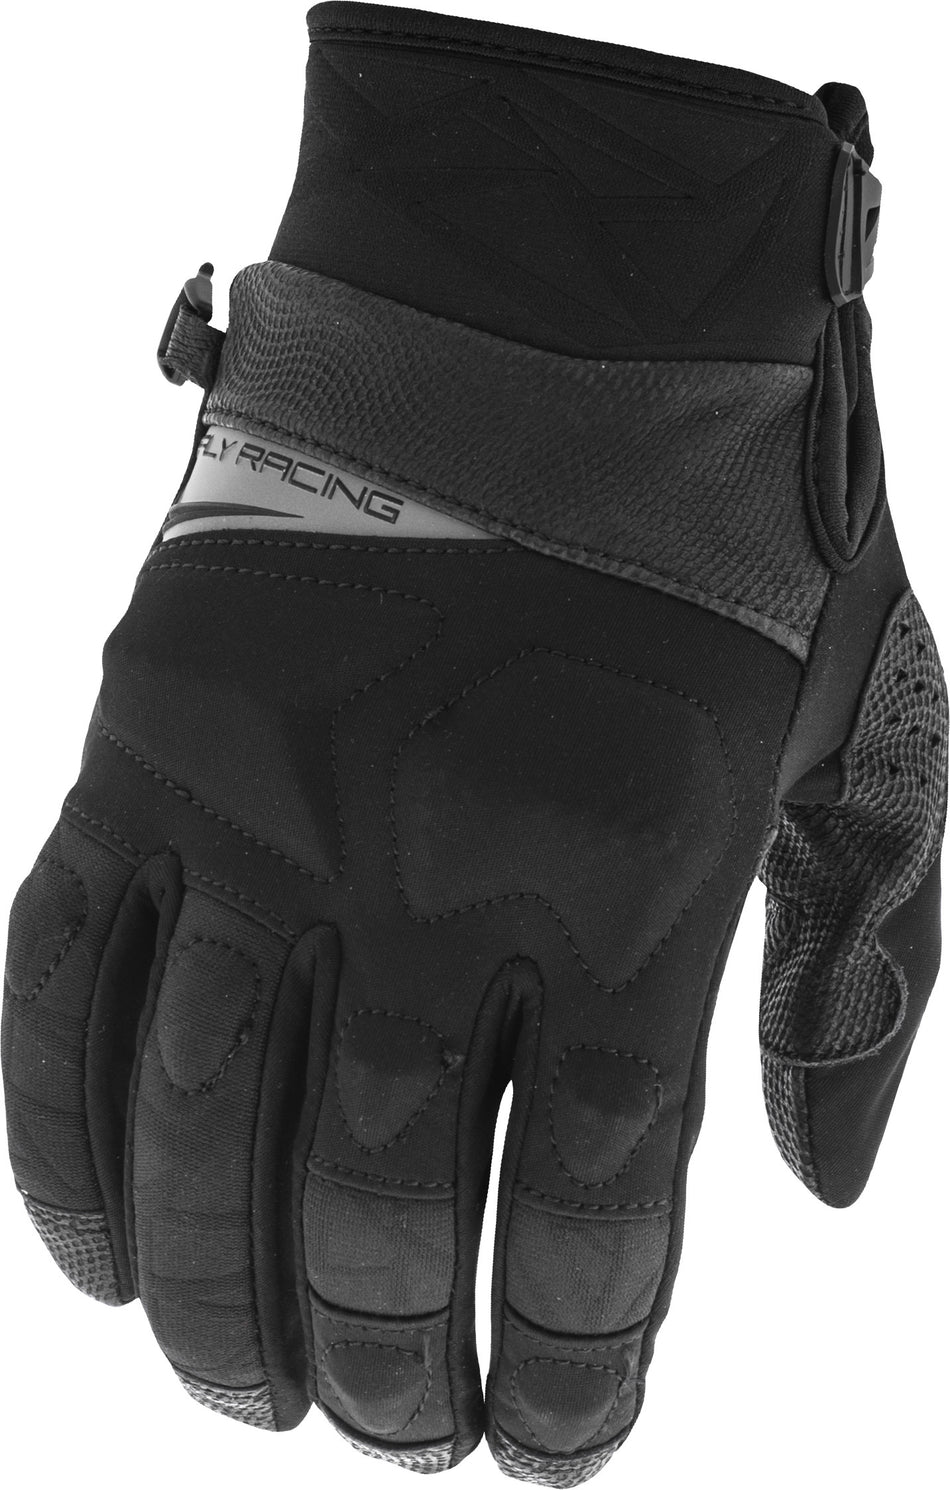 FLY RACING Boundary Gloves Black Sz 09 371-03009